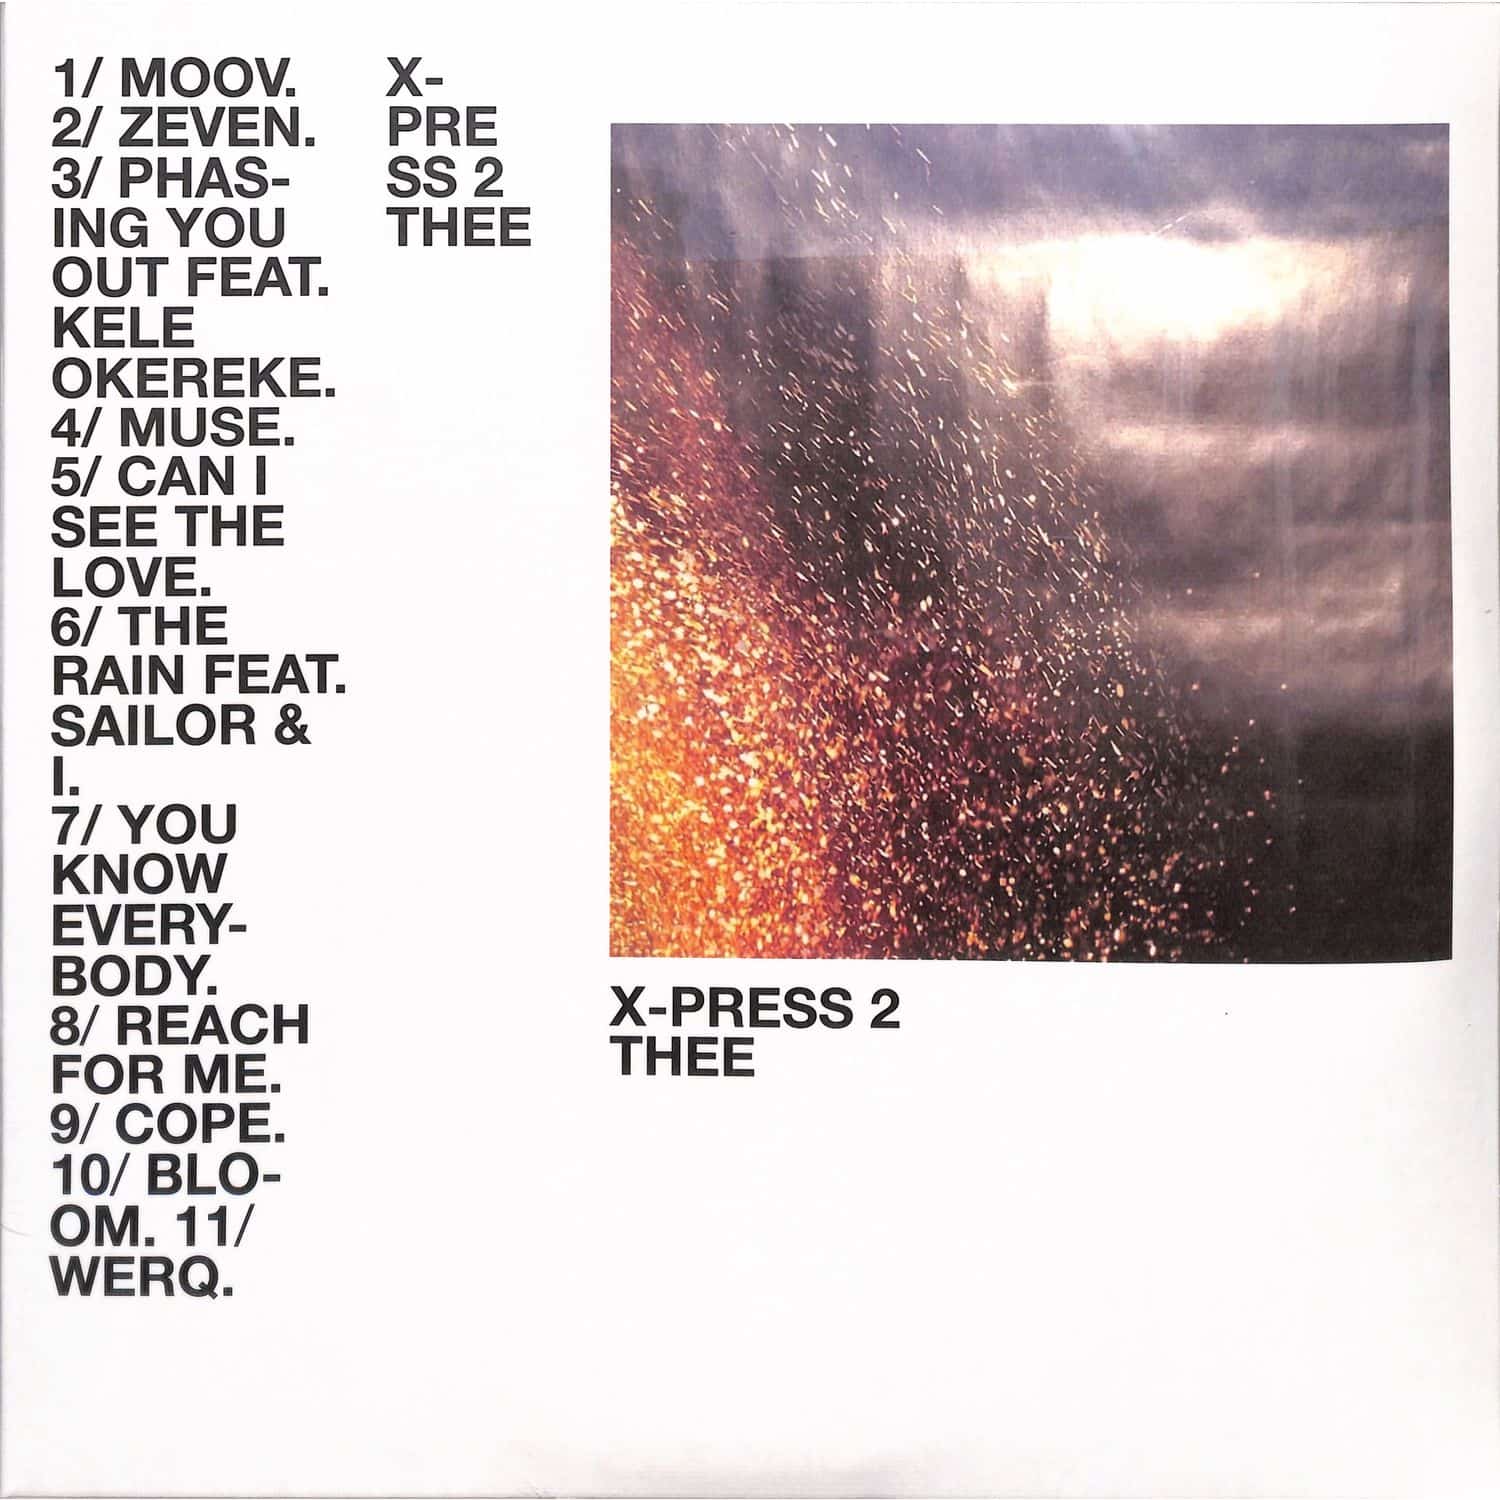 X-Press 2 - THEE 